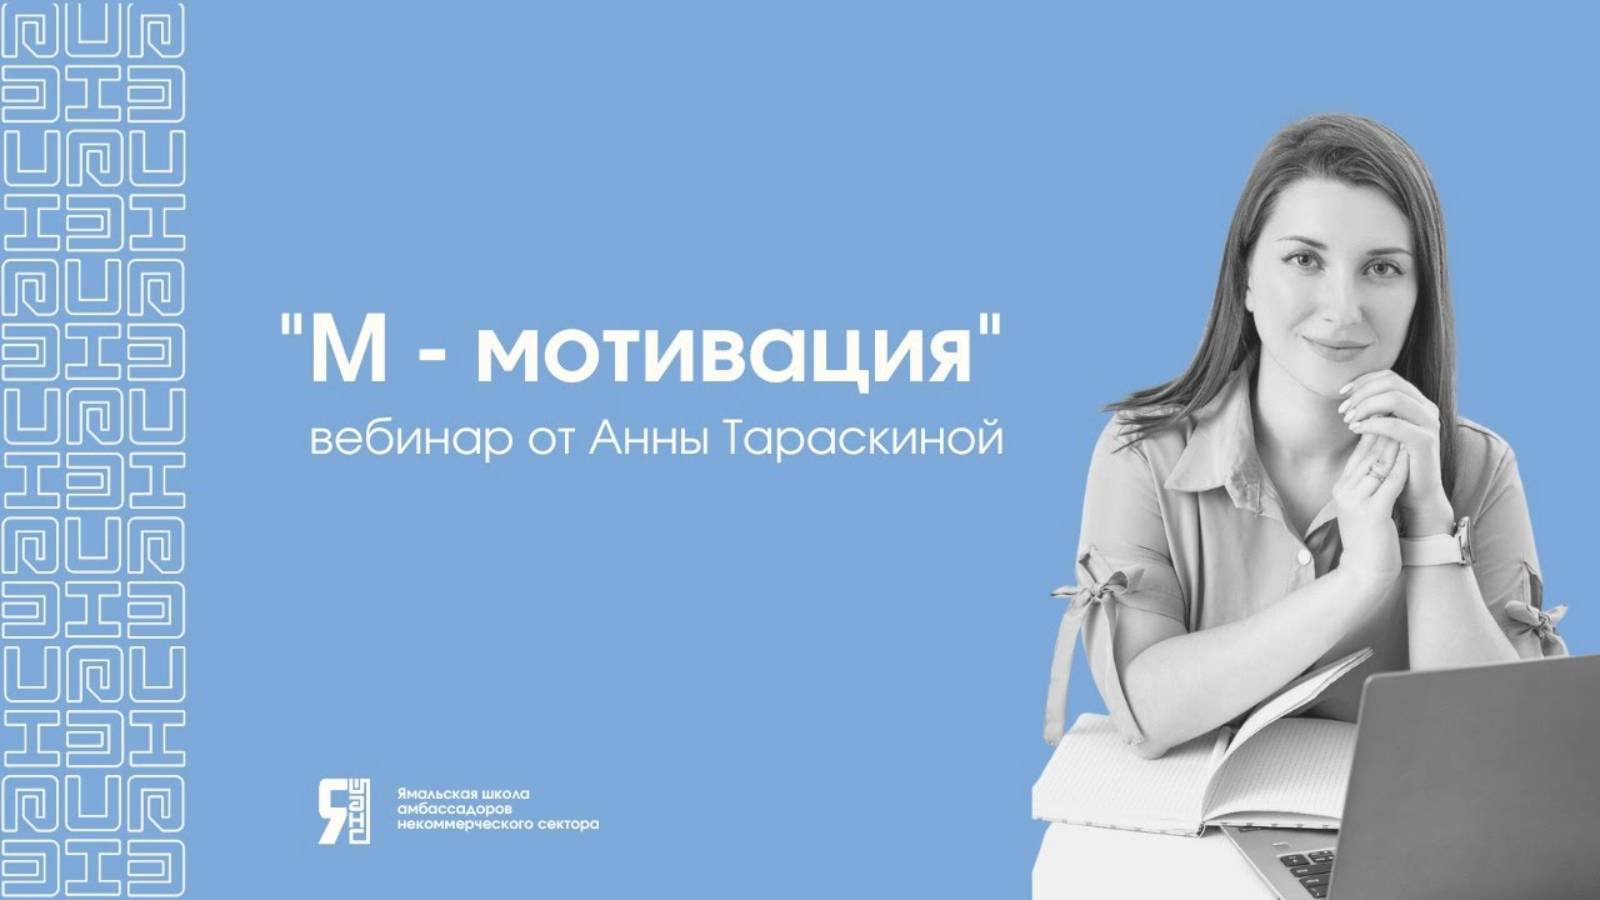 "М- мотивация", спикер Анна Тараскина, открытый вебинар